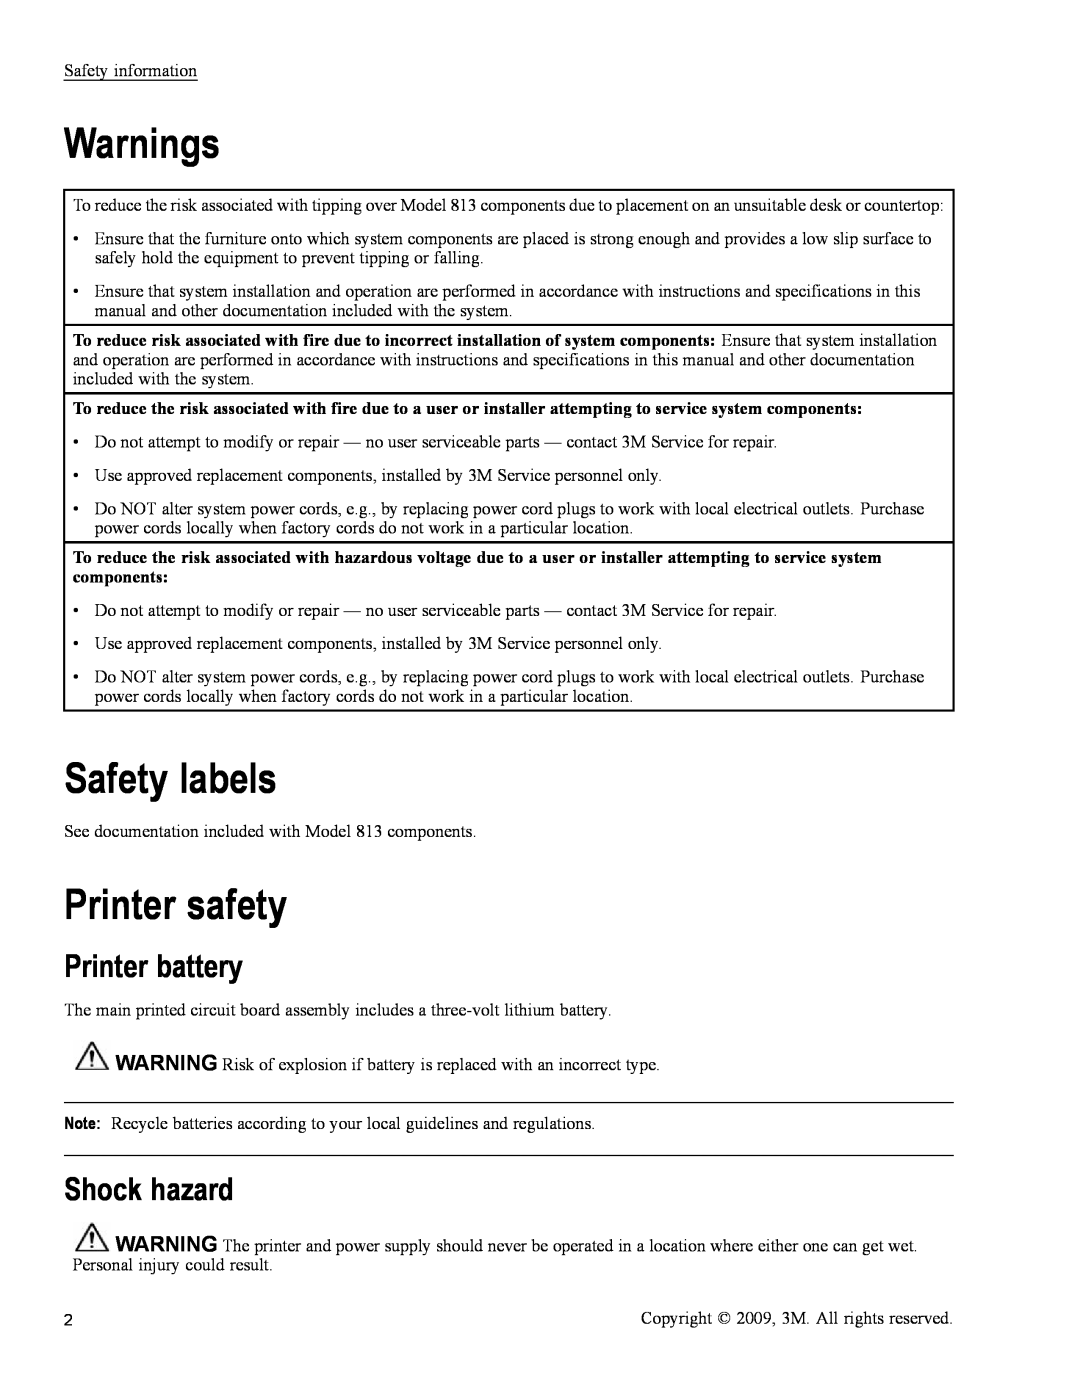 3M 813 owner manual Warnings, Safety labels, Printer safety, Printer battery, Shock hazard 